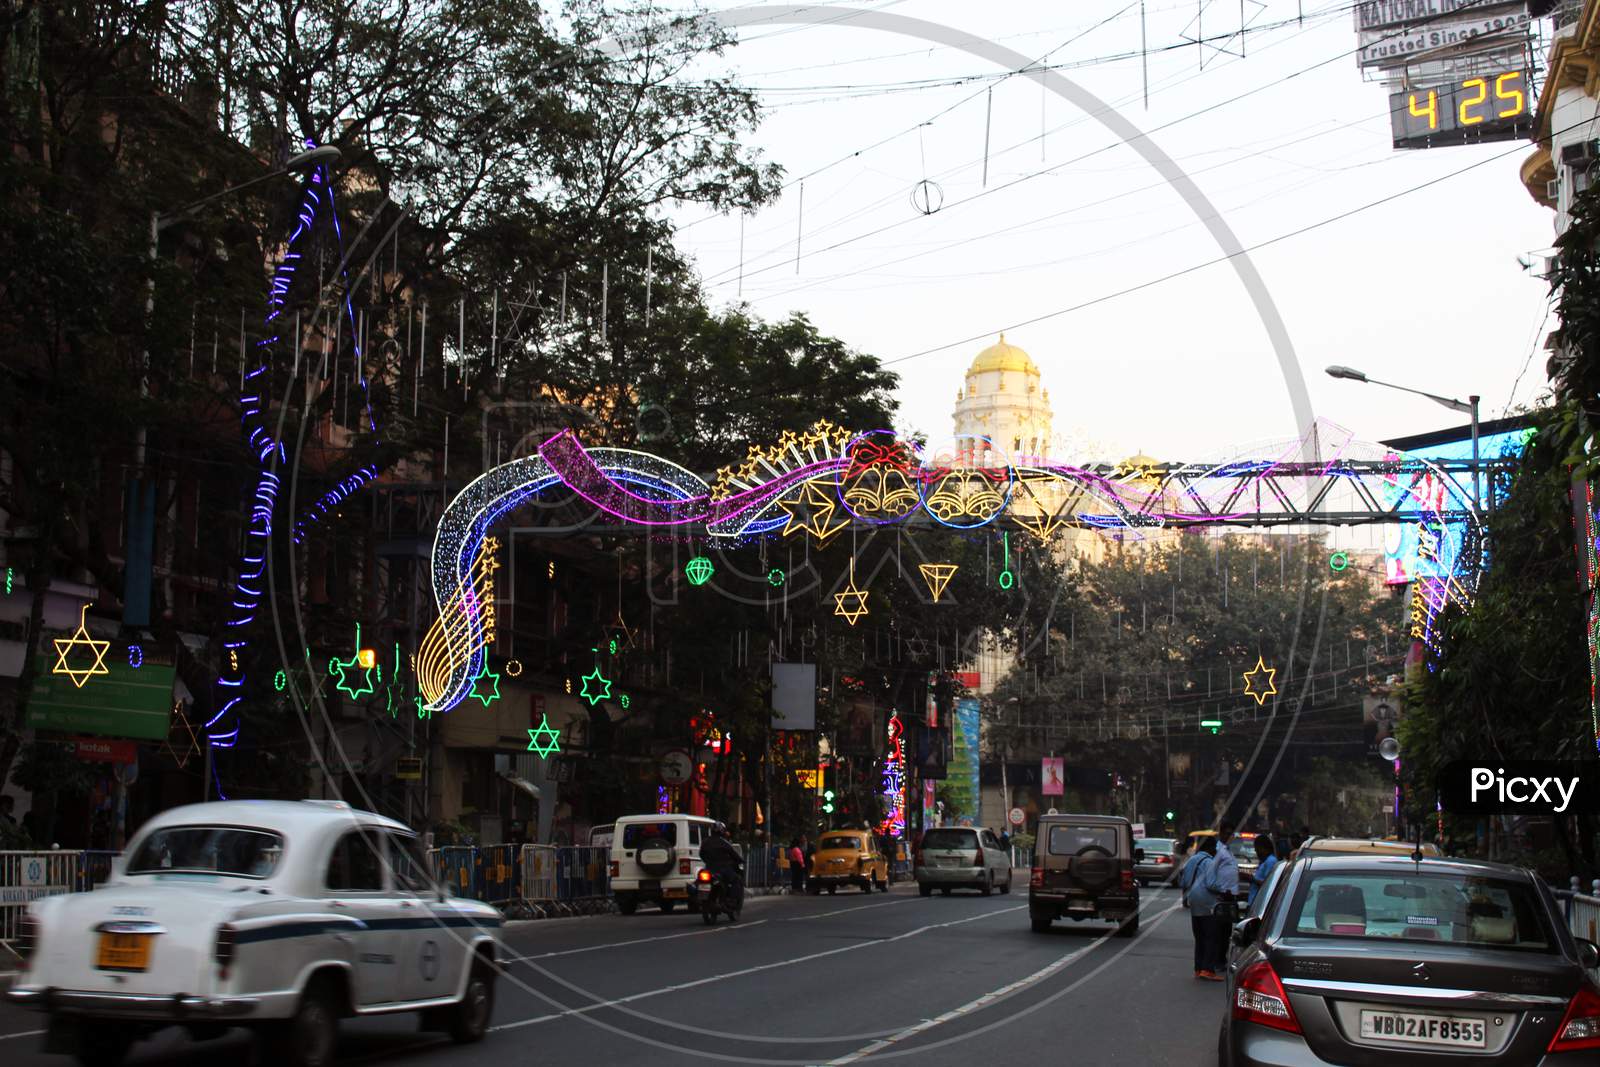 Christmas time lighting and decorations, at Park Street, Kolkata.